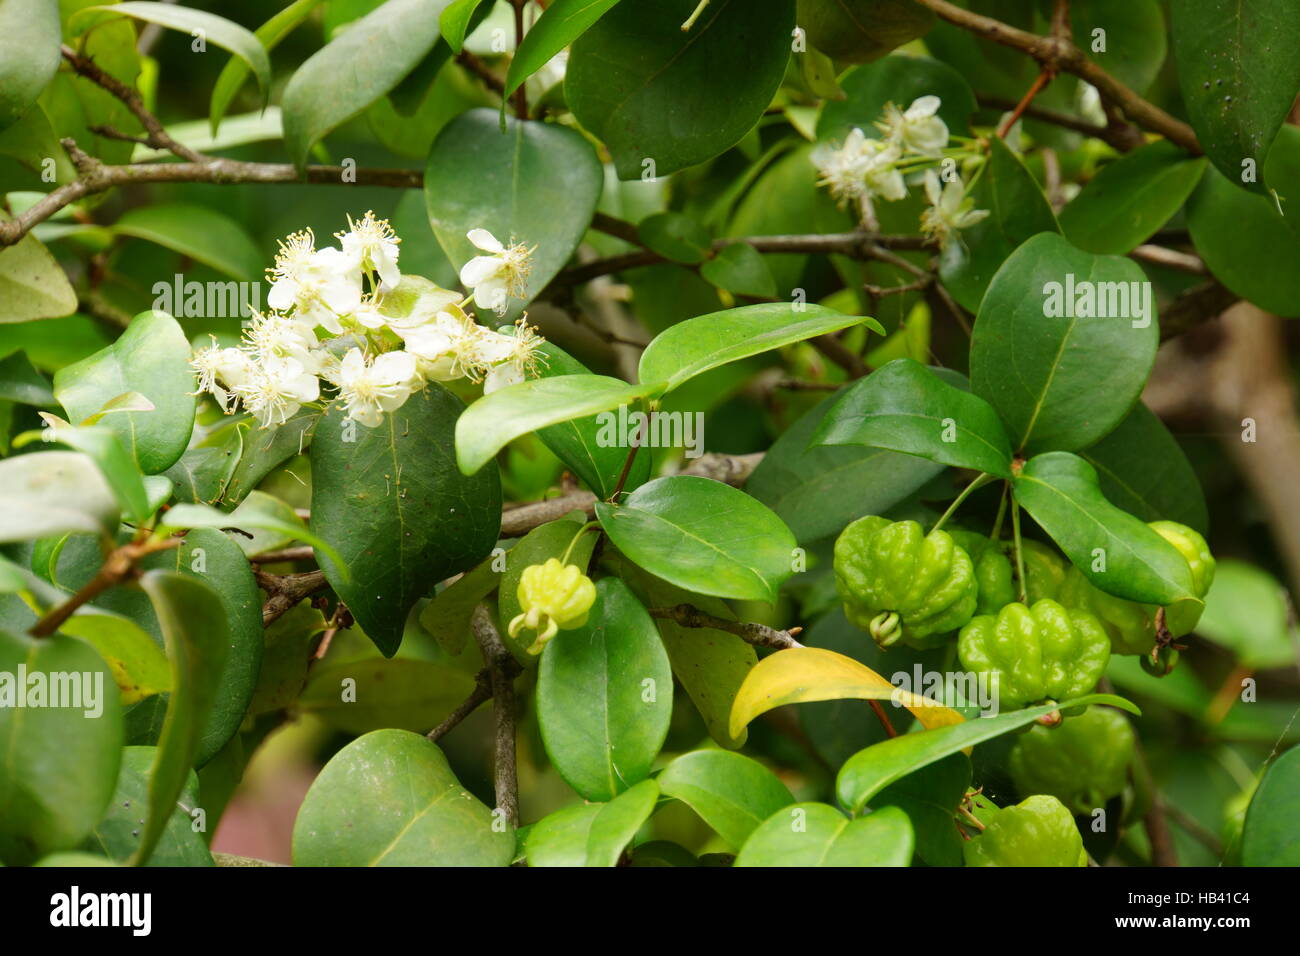 Surinam cherry [Eugenia uniflora] Stock Photo